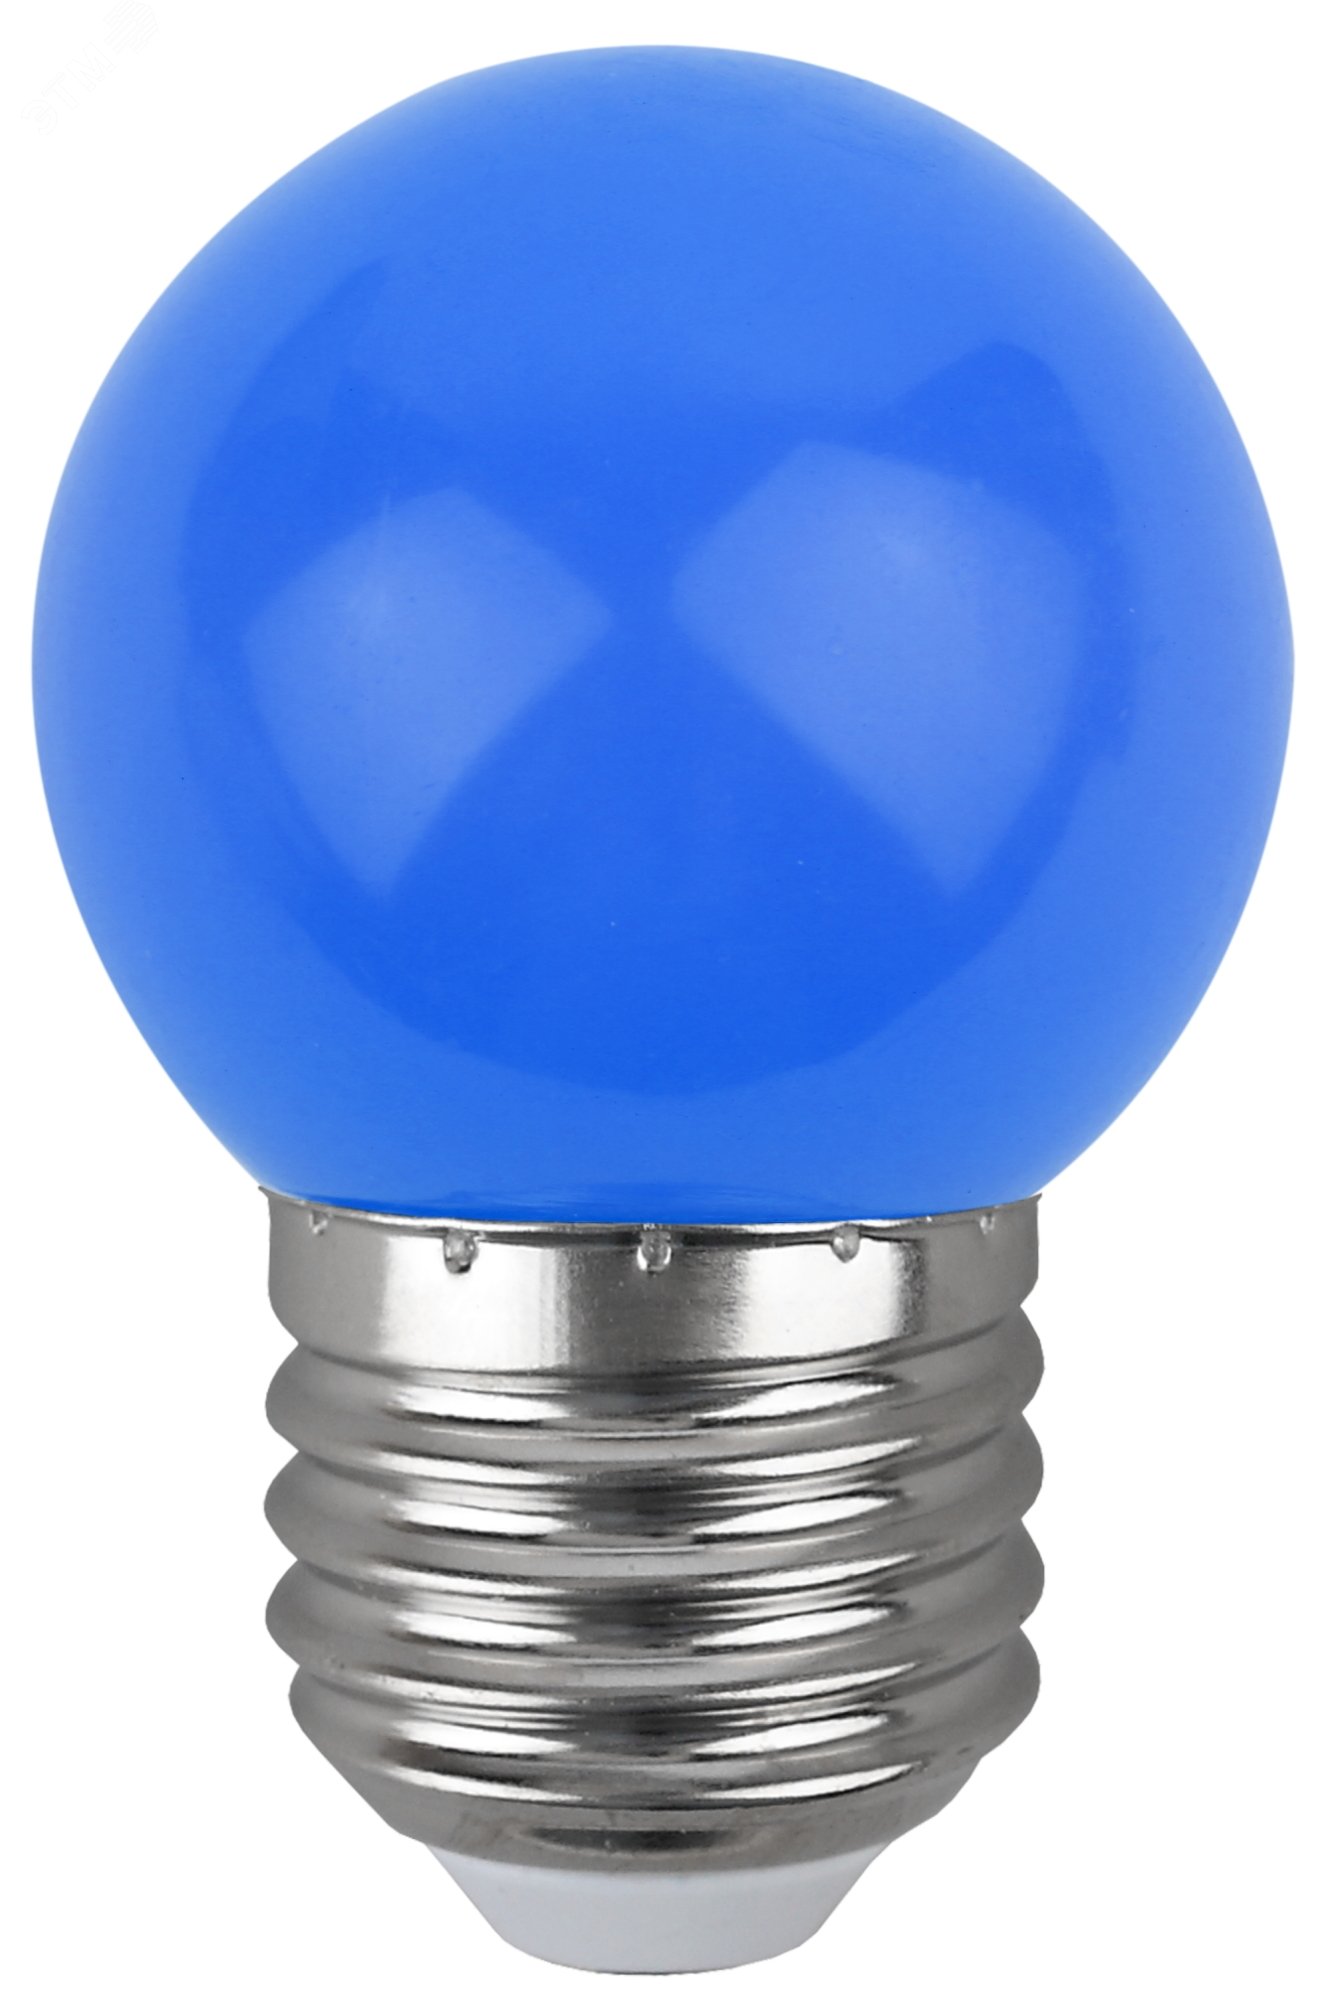 Лампа светодиодная для Белт-Лайт диод. шар син., 4SMD, 1W, E27 ERABL45-E27 LED Р45-1W-E27 Б0049573 ЭРА - превью 3